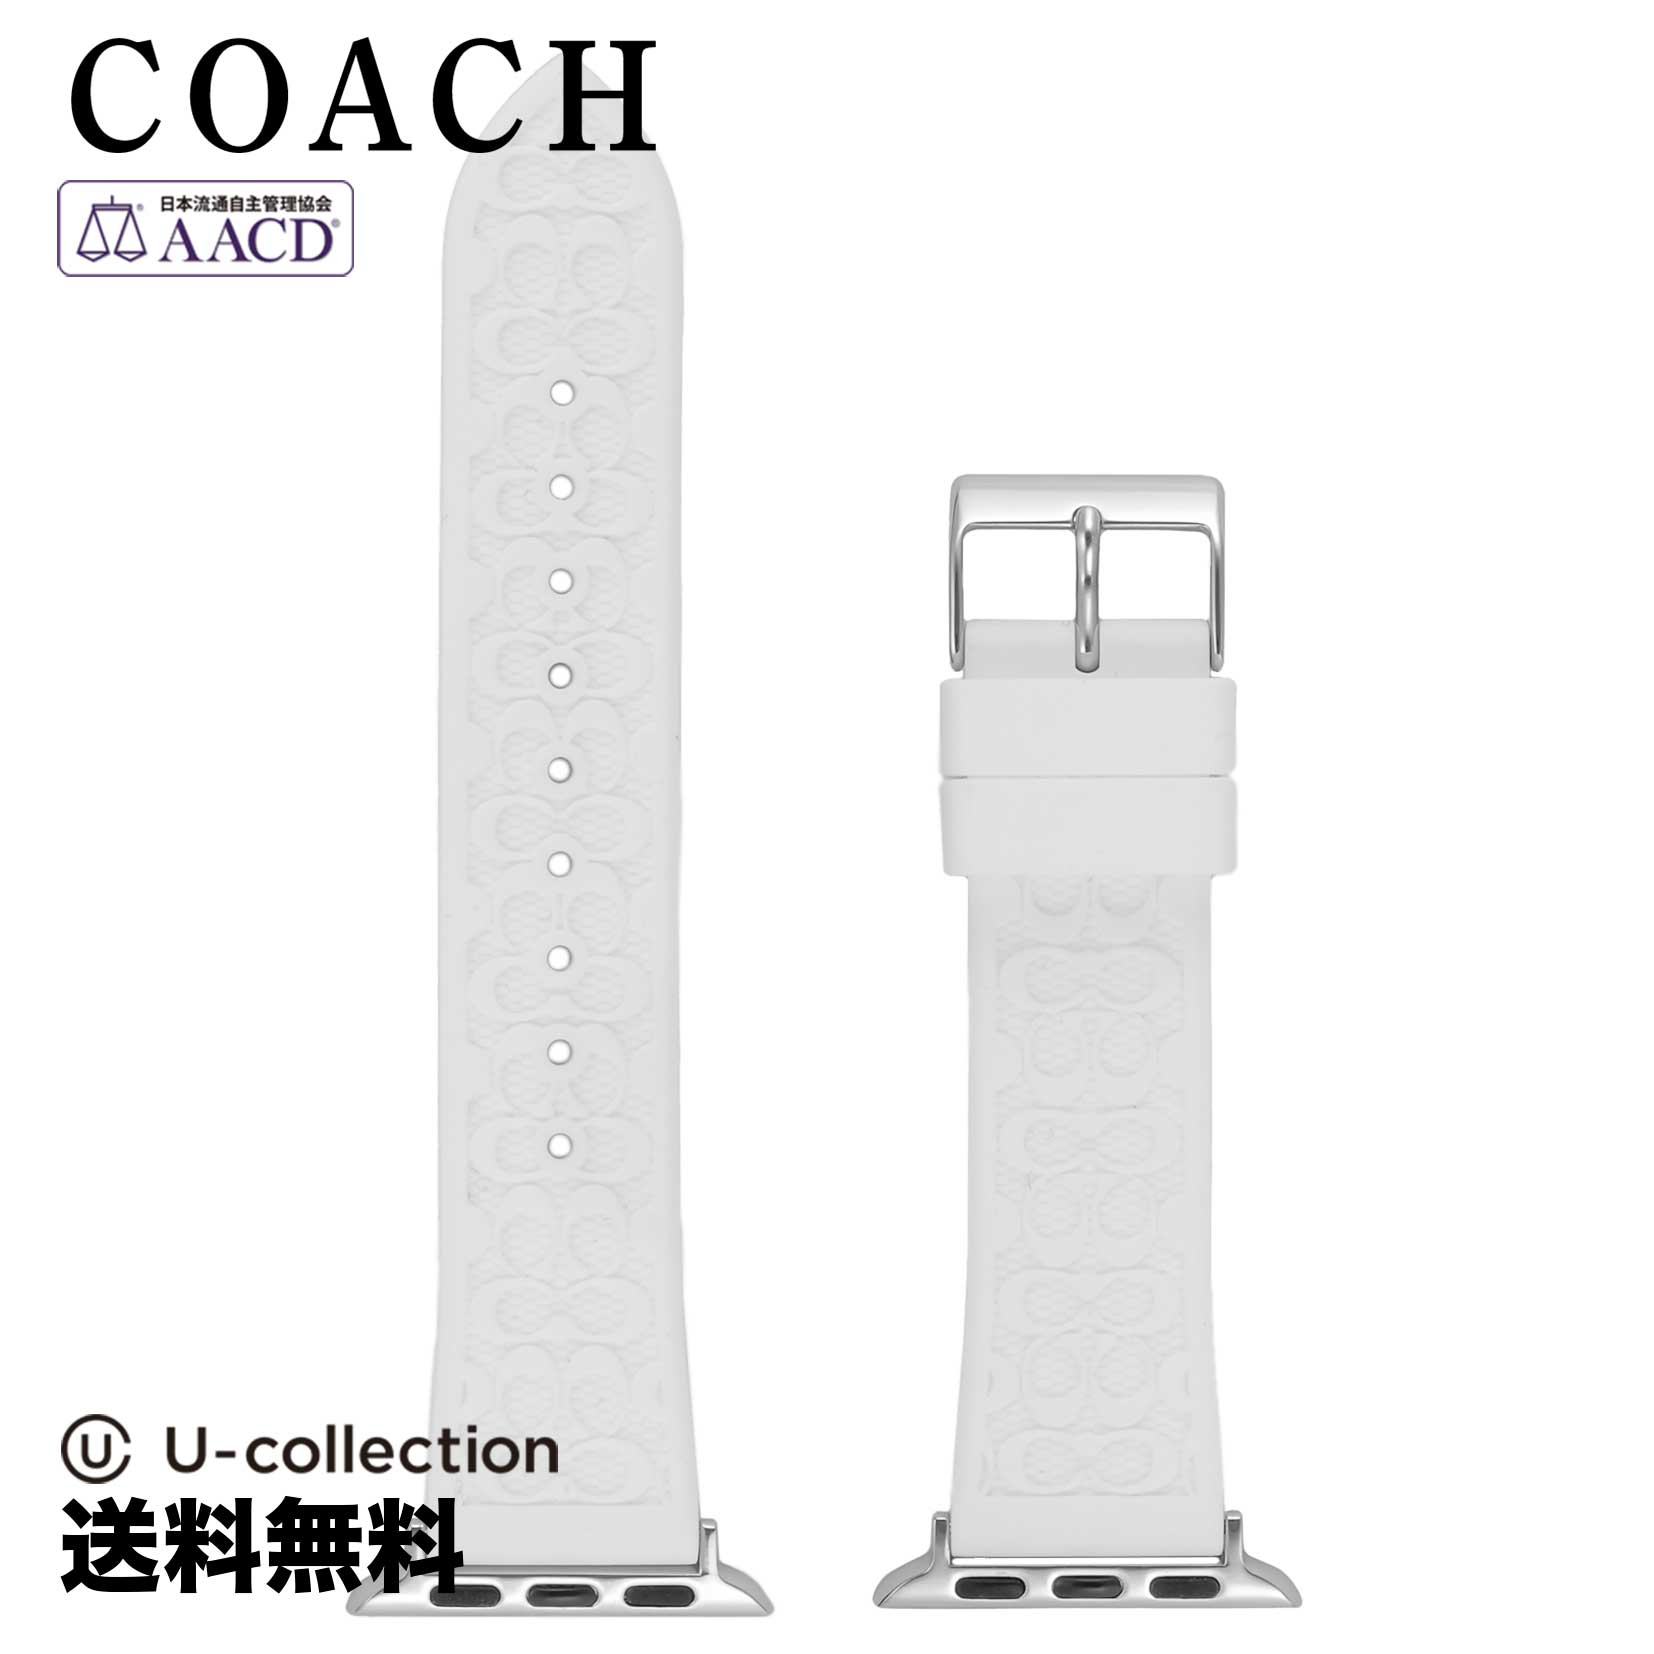 COACH コーチ Apple Watch アップルウォッチ 変えベルト スマートウォッチ 14700050 時計 腕時計 高級腕時計 ブランド